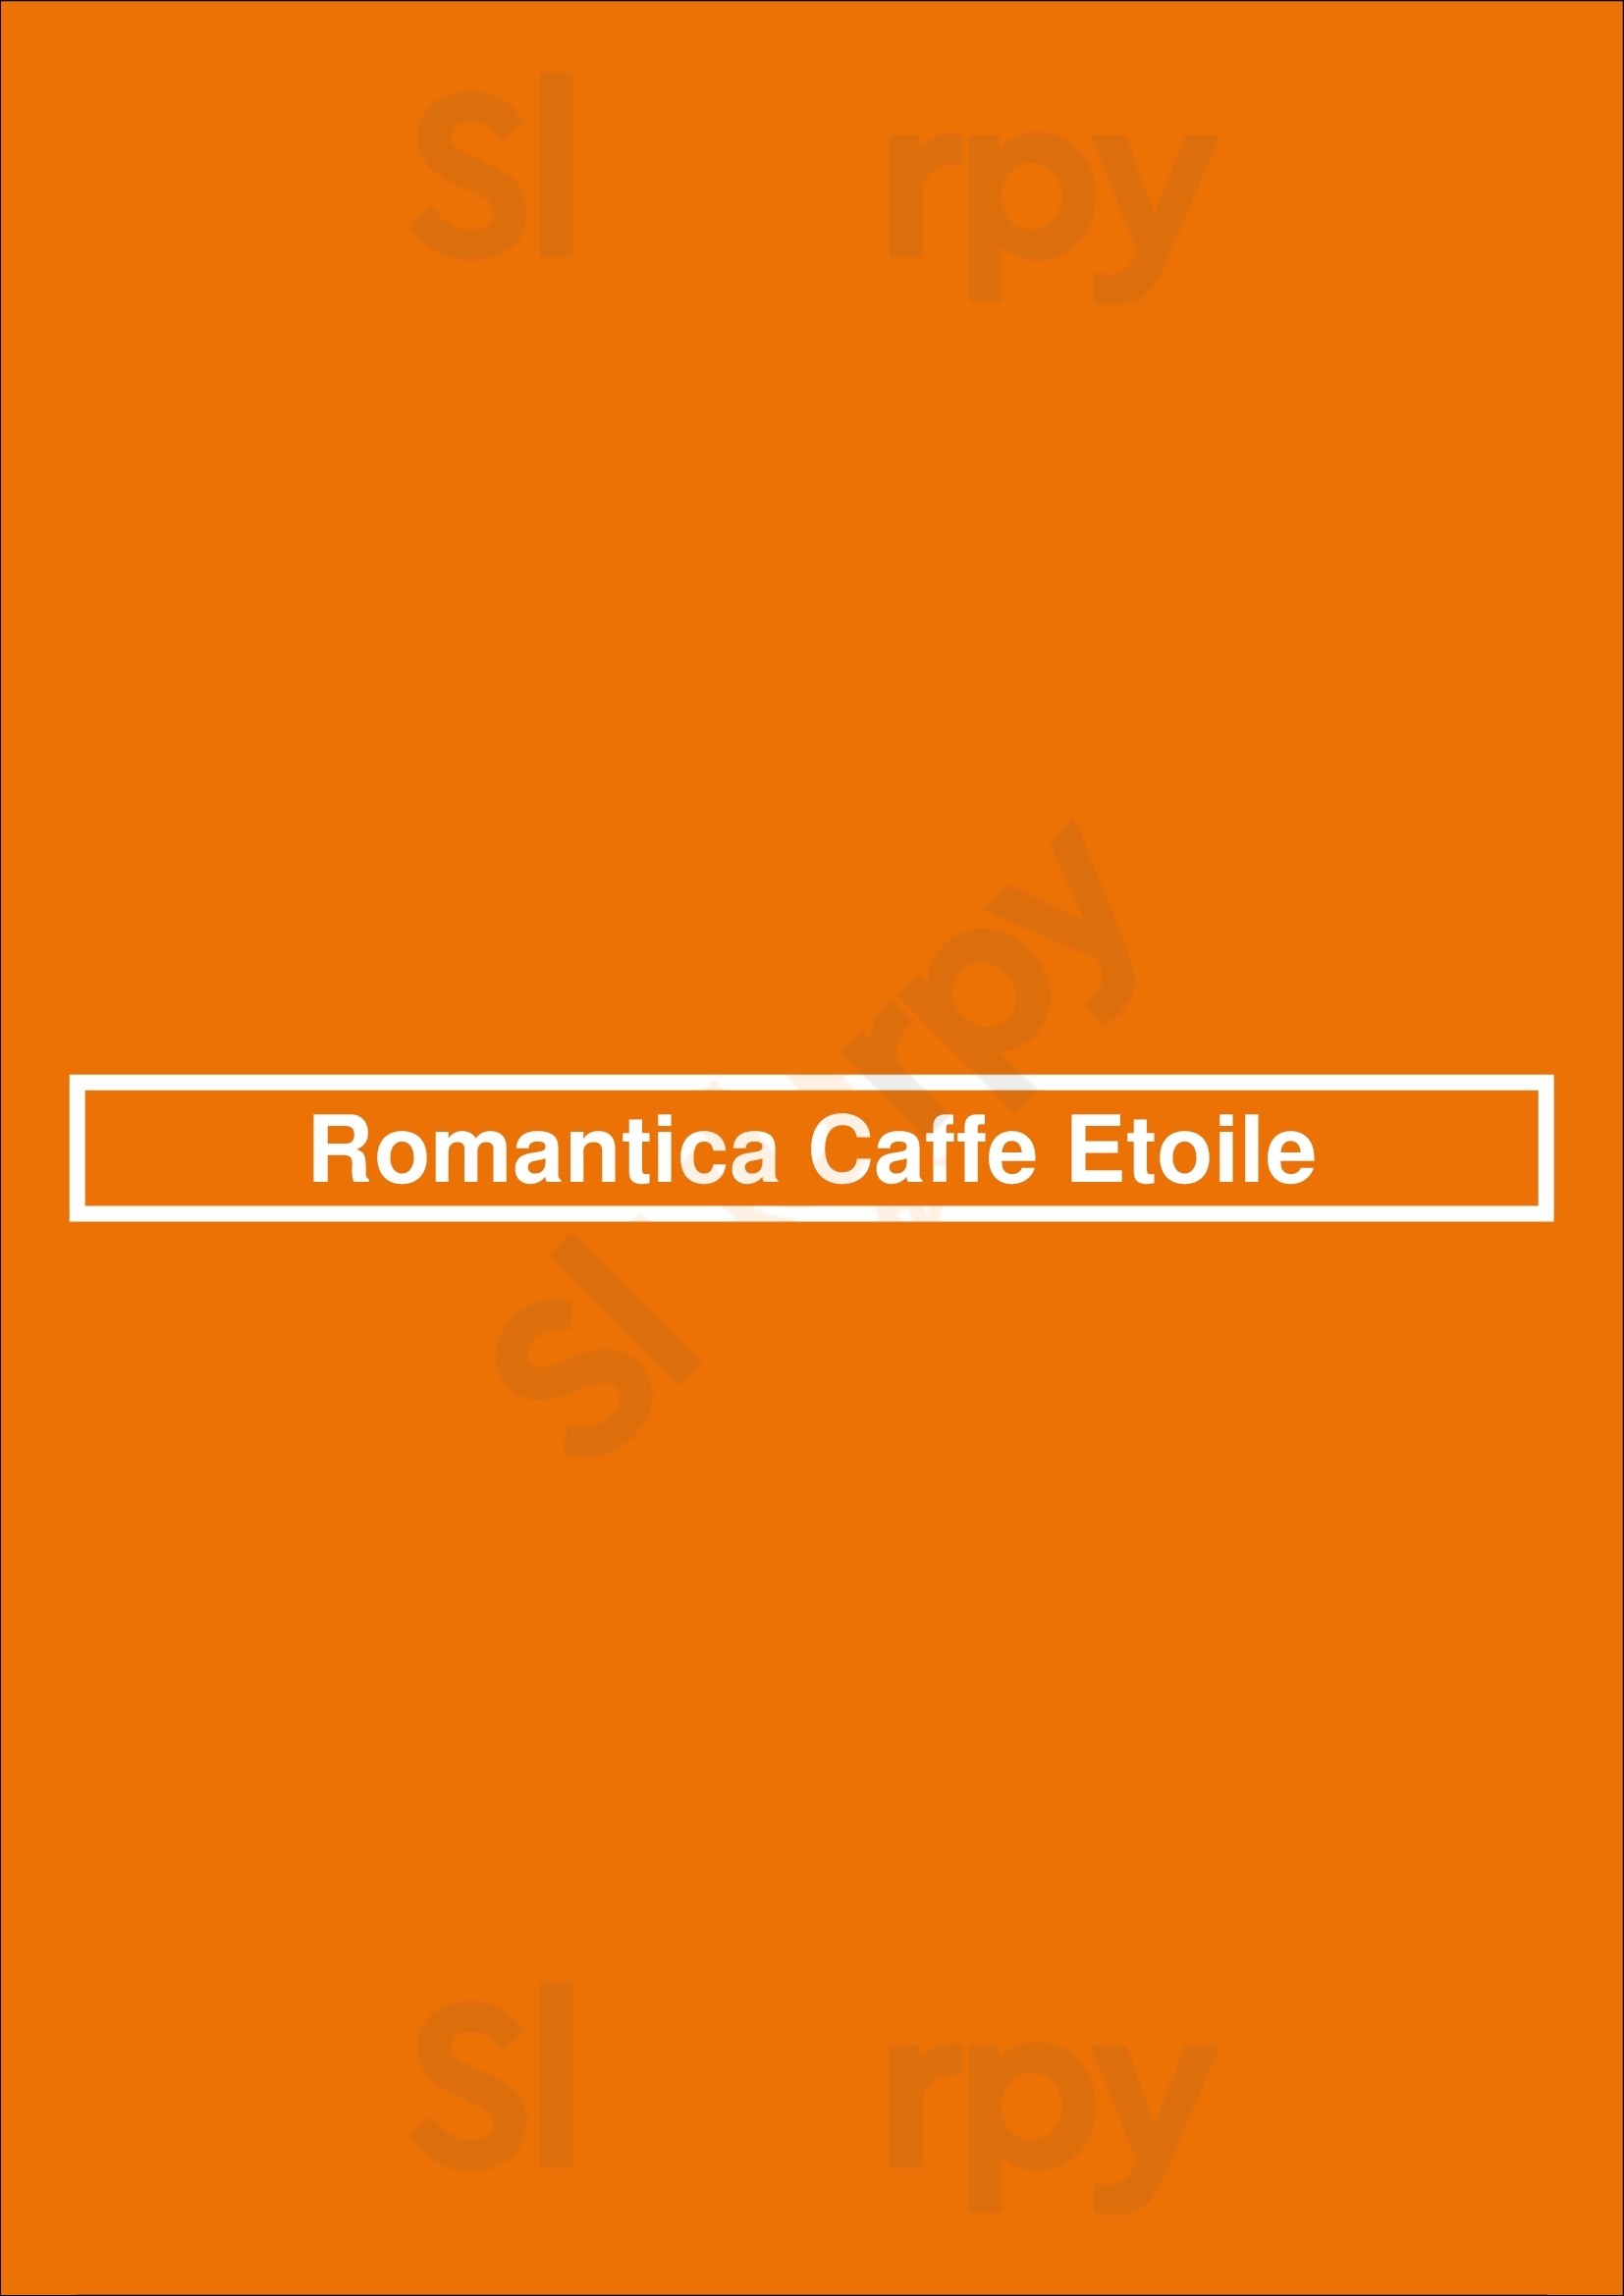 Romantica Caffe Etoile Paris Menu - 1